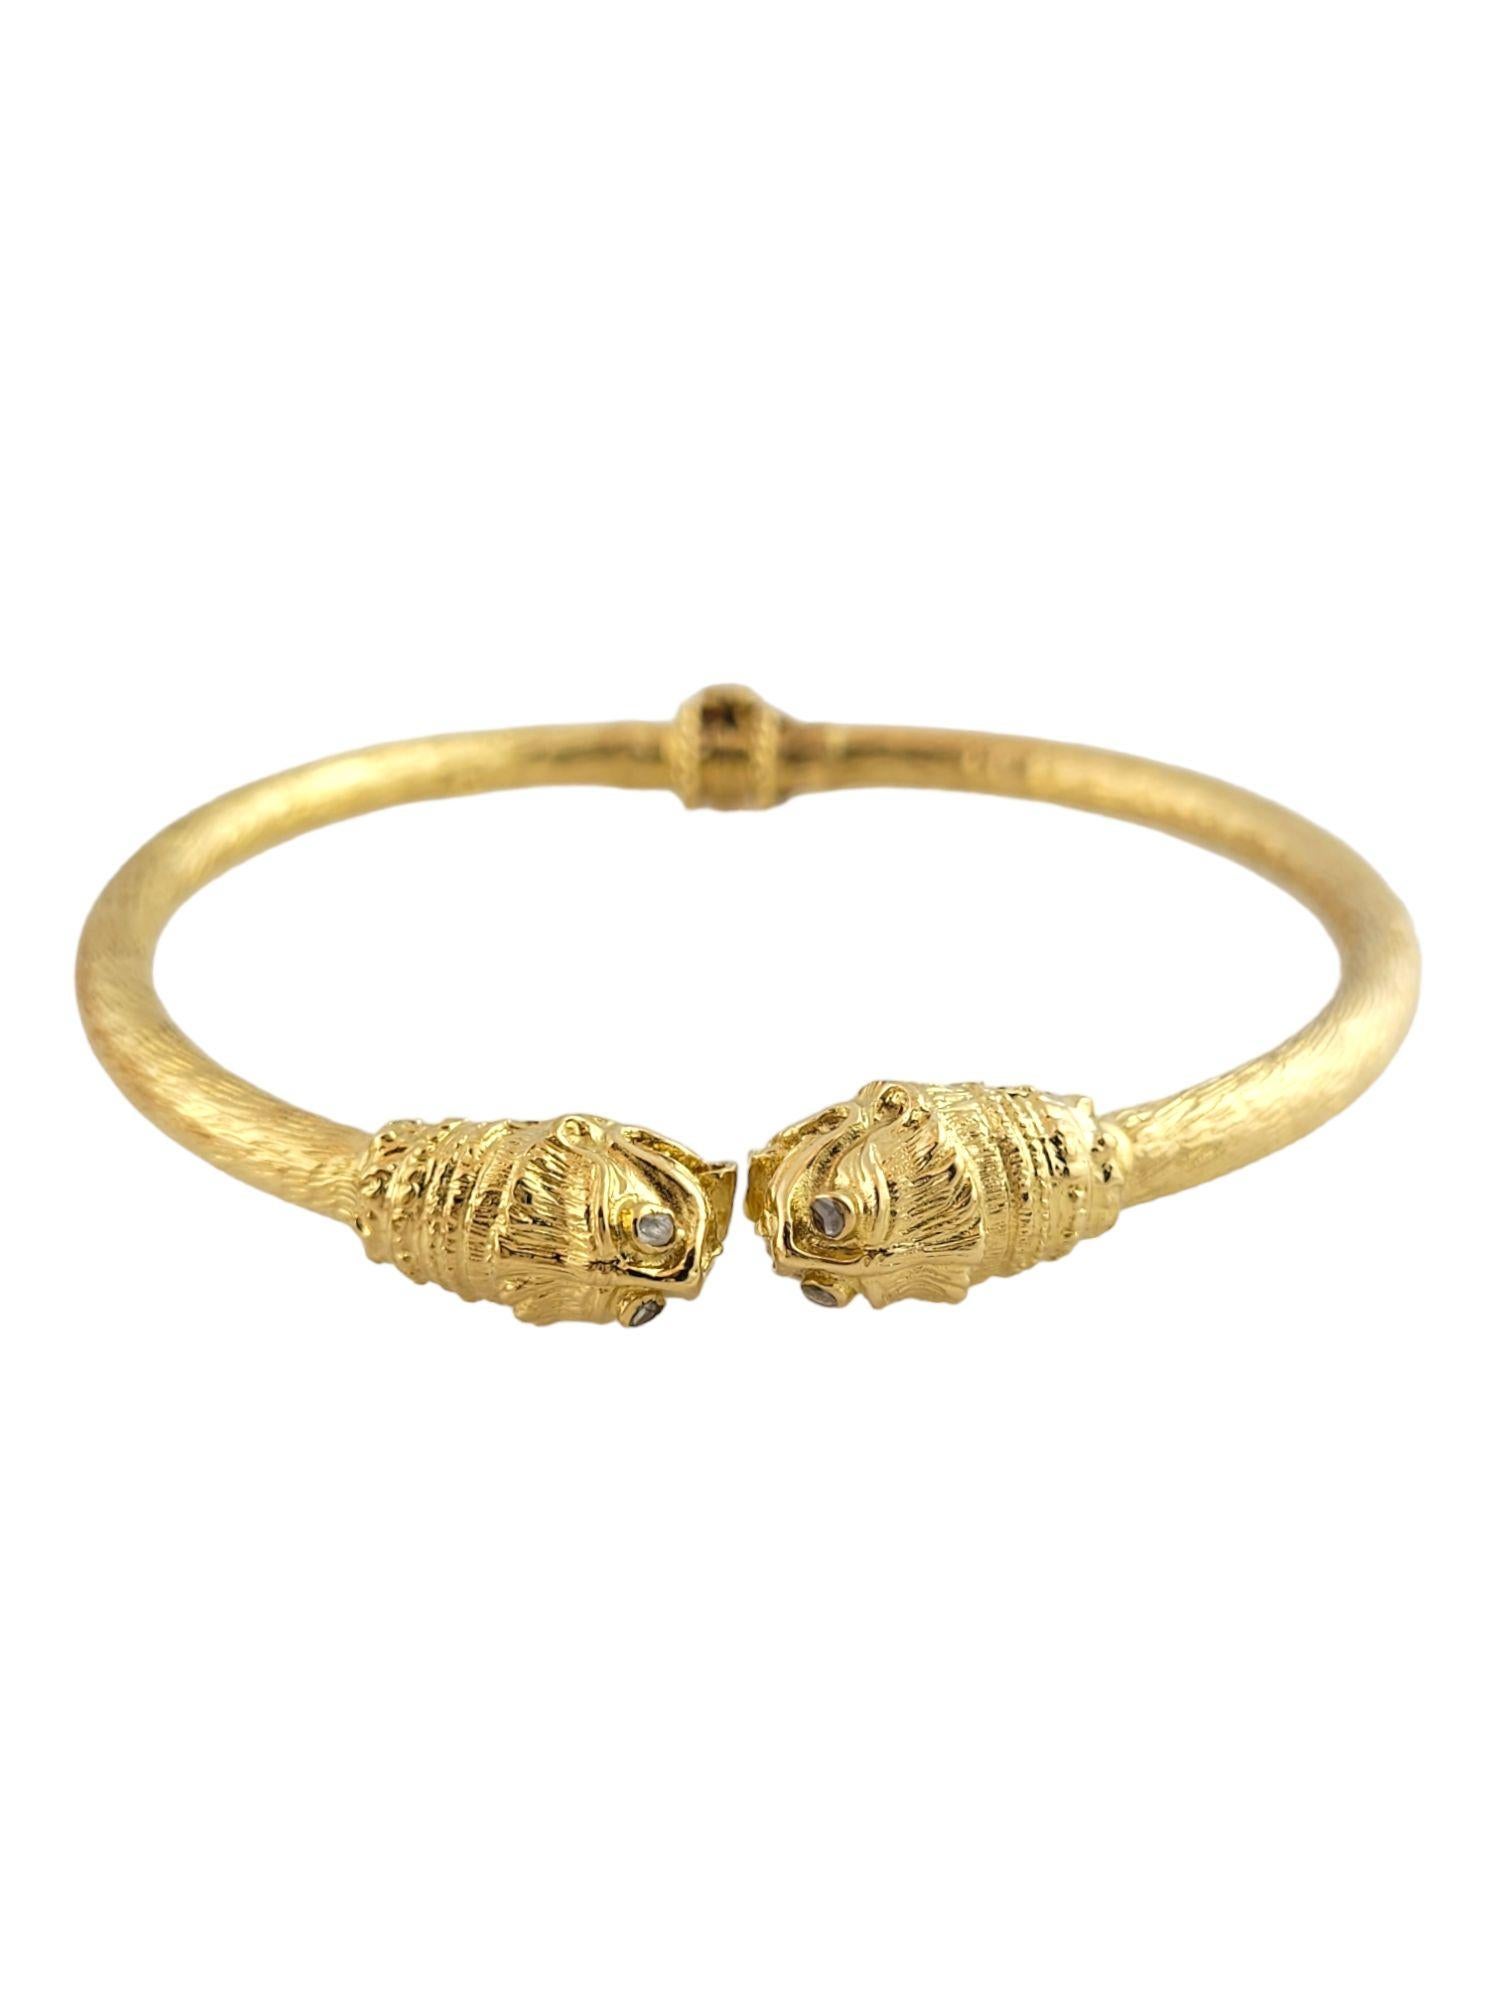 18 Karat Yellow Gold and Diamond Serpent Head Bangle Bracelet For Sale 2